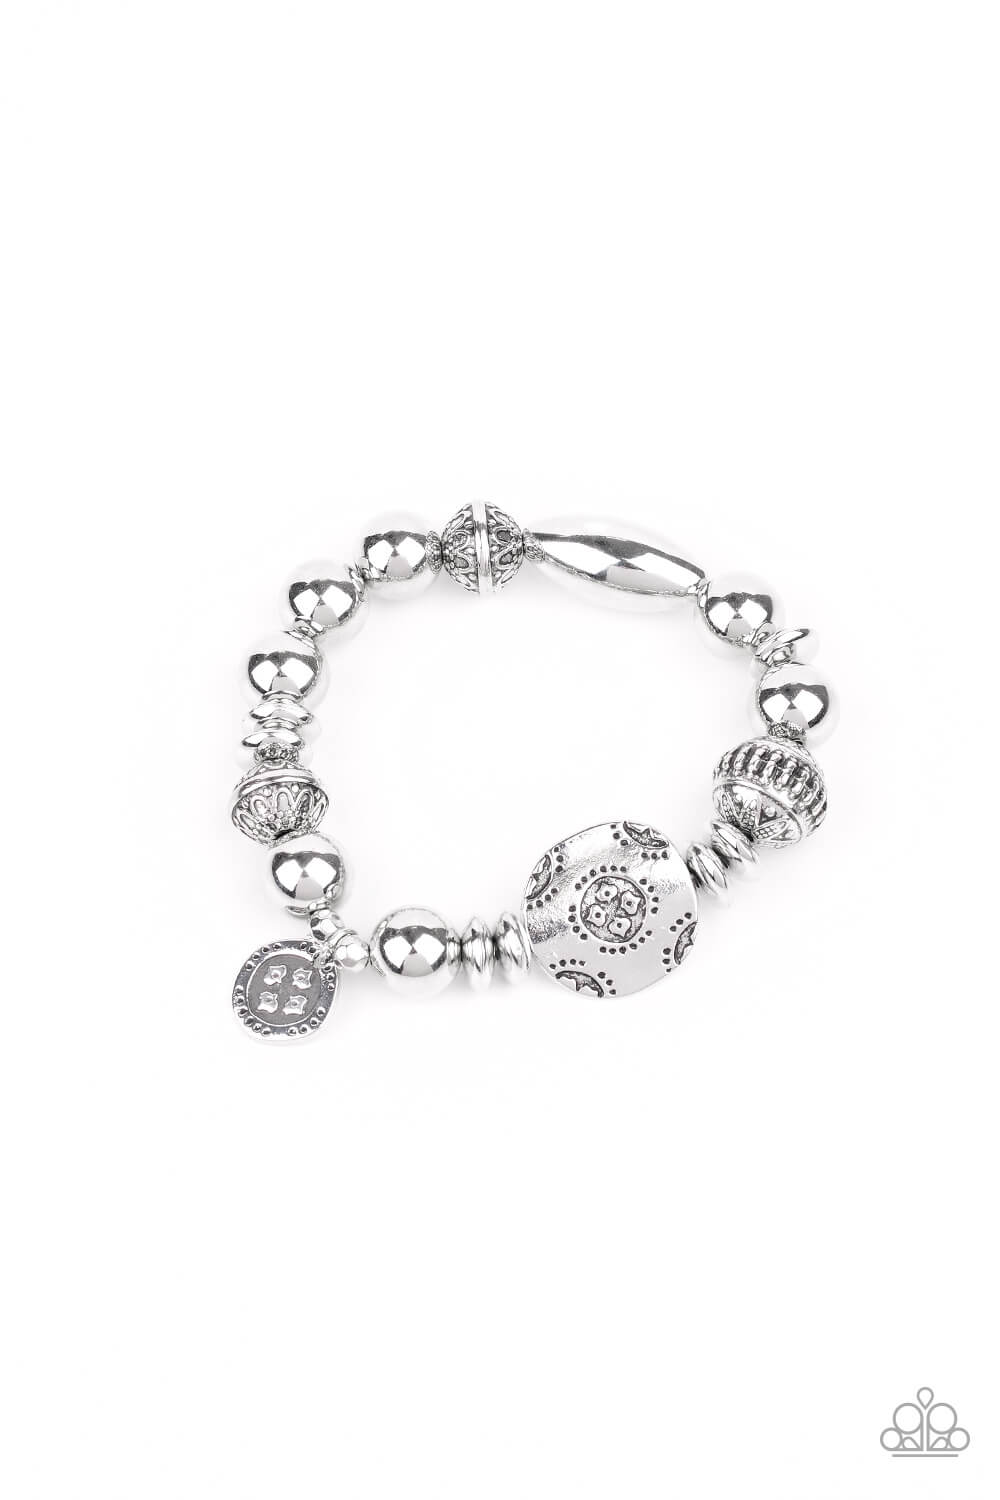 Aesthetic Appeal - Silver Bracelet - Princess Glam Shop